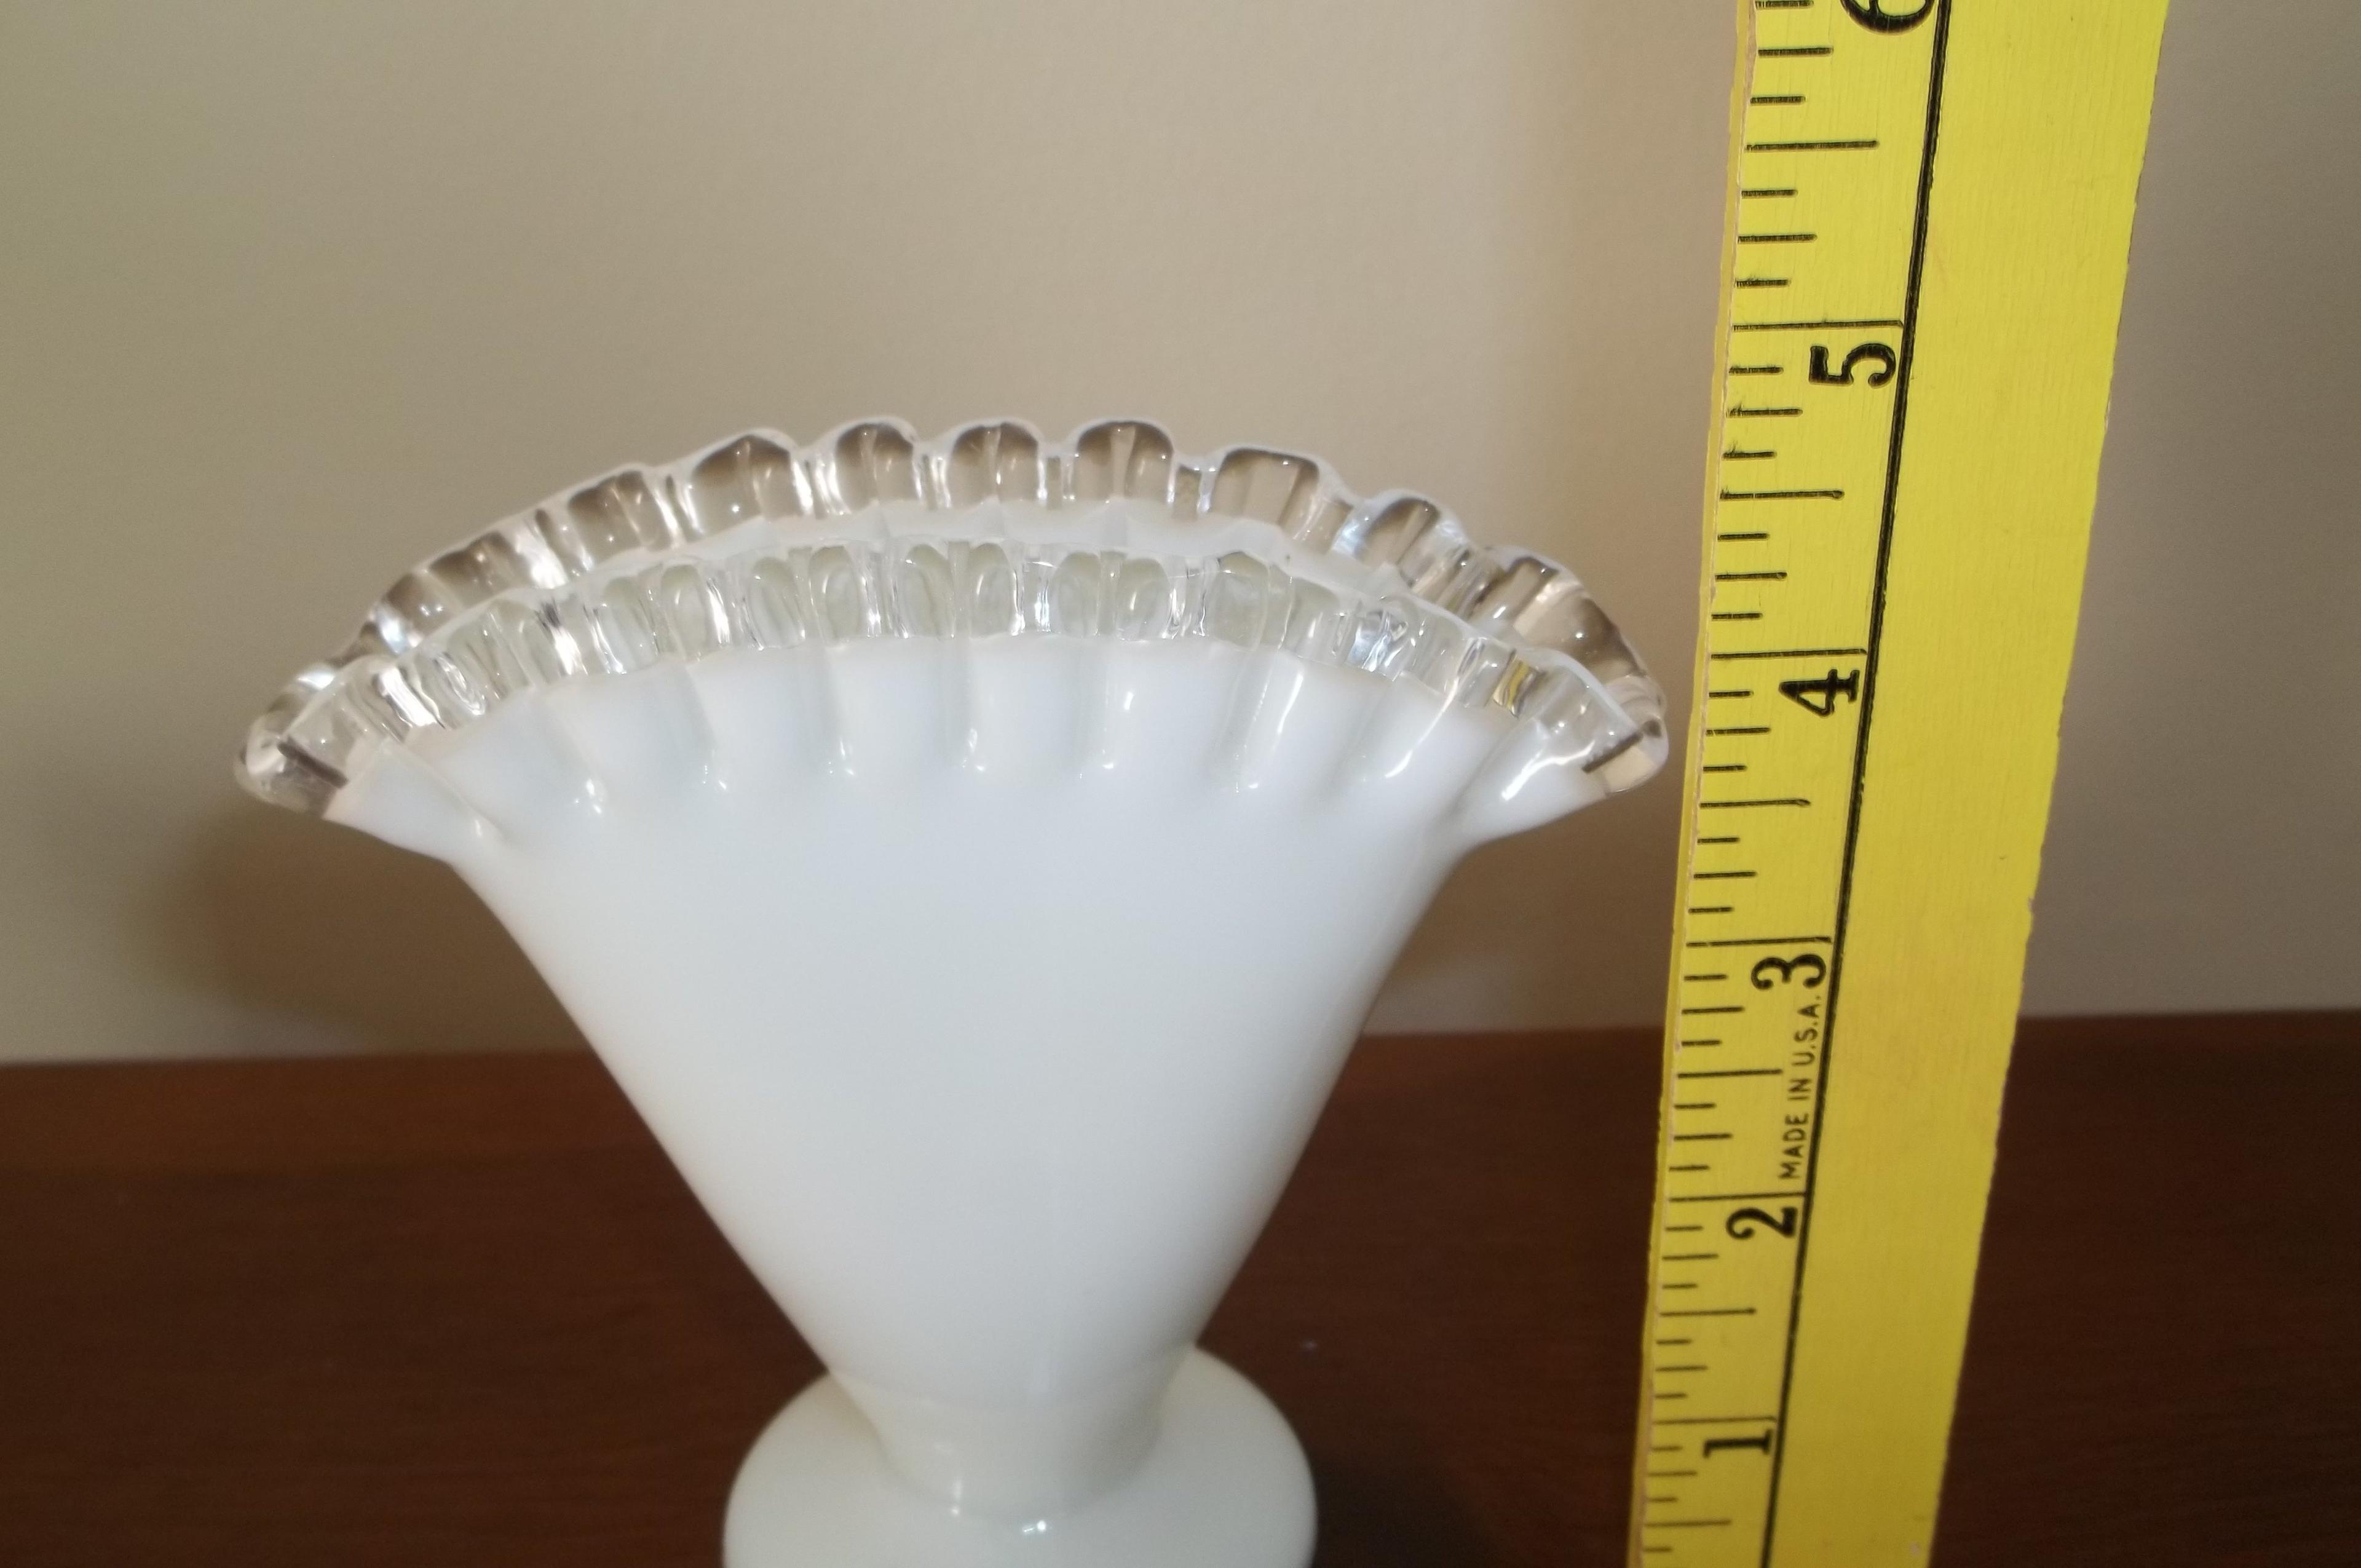 Small Fenton Milk Glass Vase